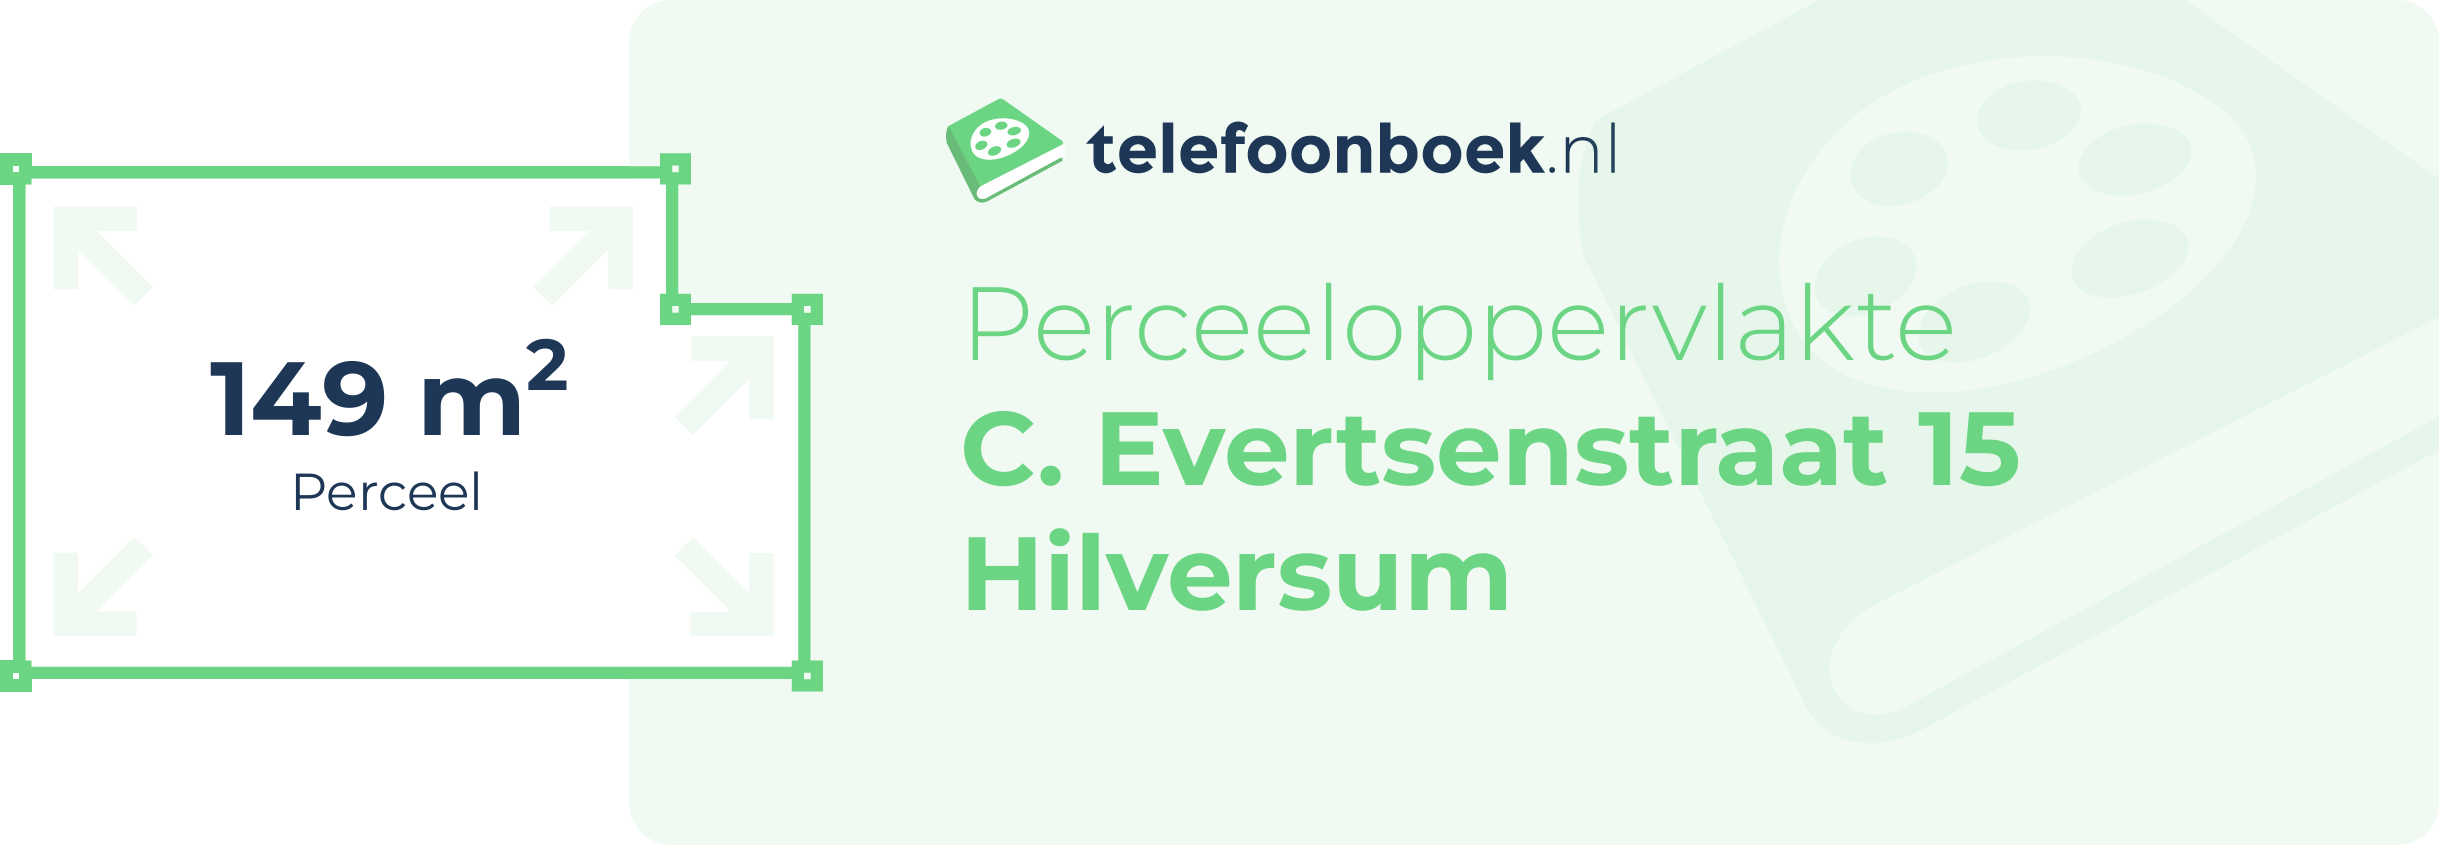 Perceeloppervlakte C. Evertsenstraat 15 Hilversum